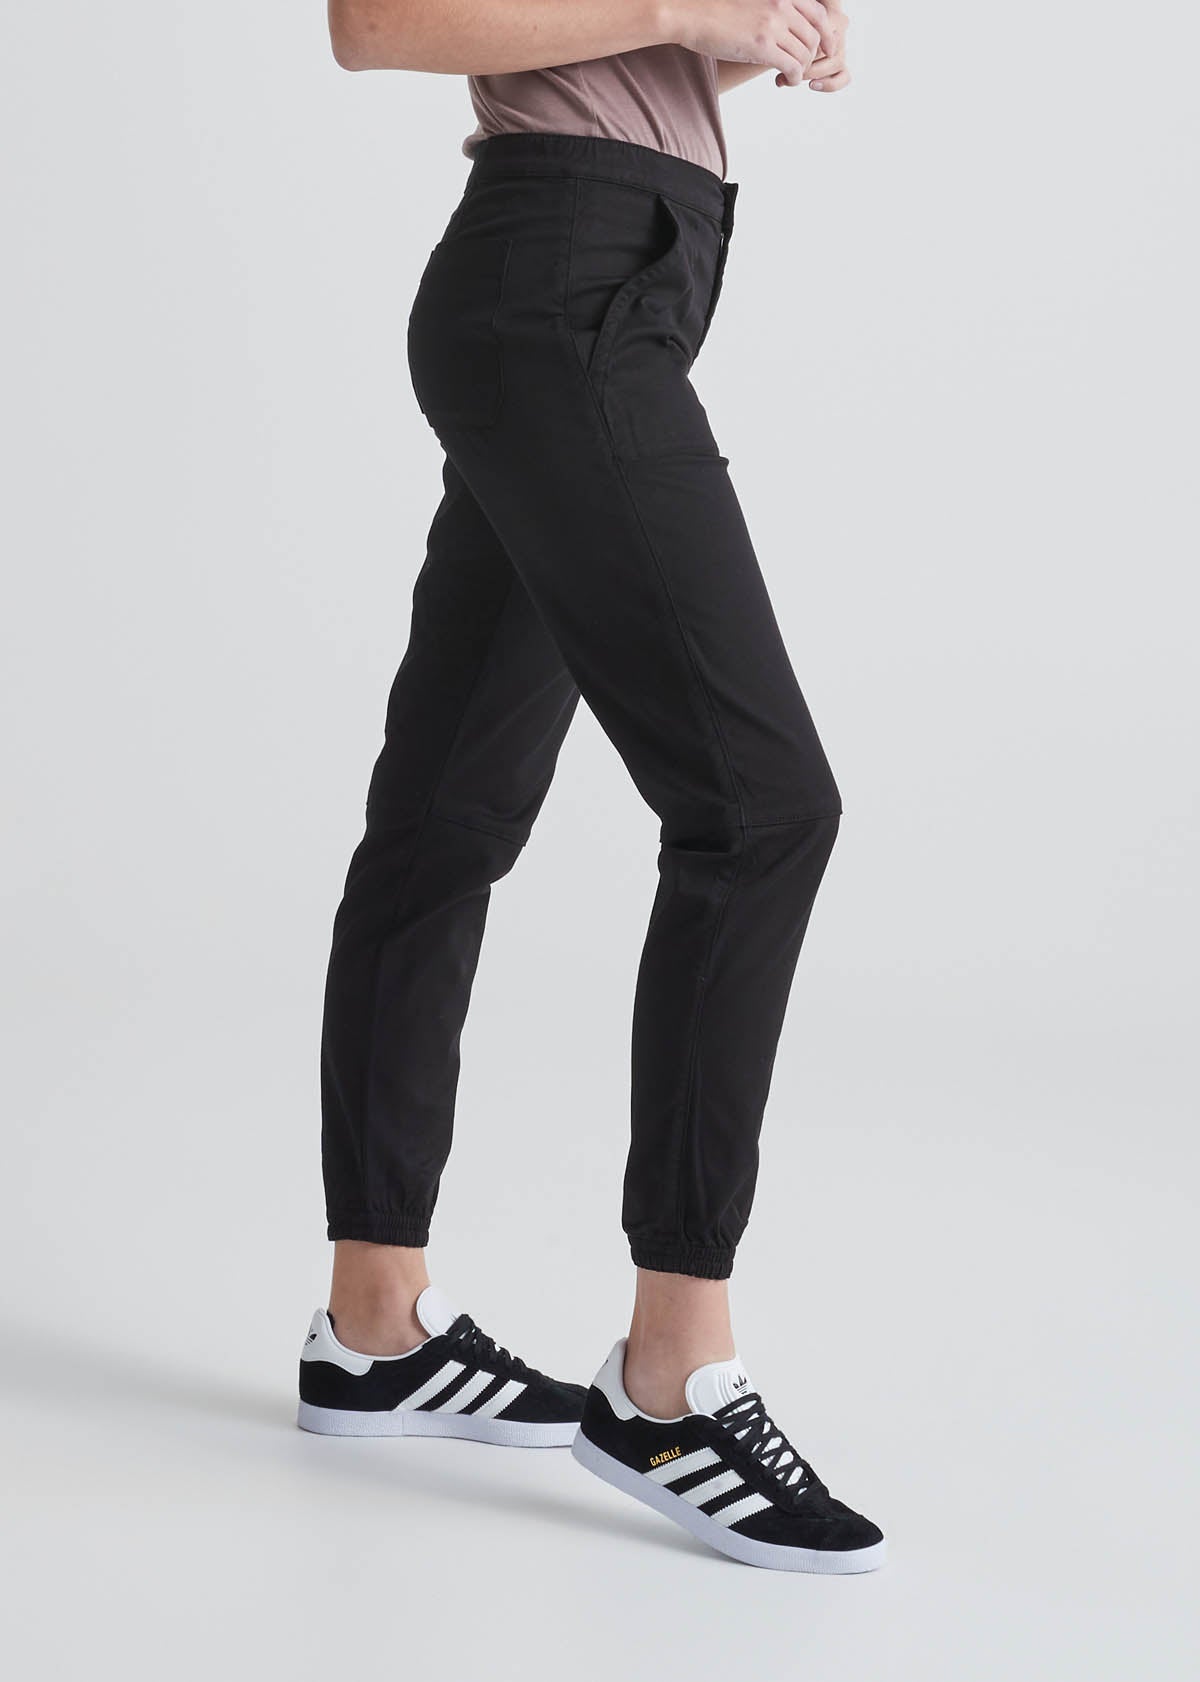 Womens Joggers | Black Dress Jogger Pants | High-Rise Activewear Pants